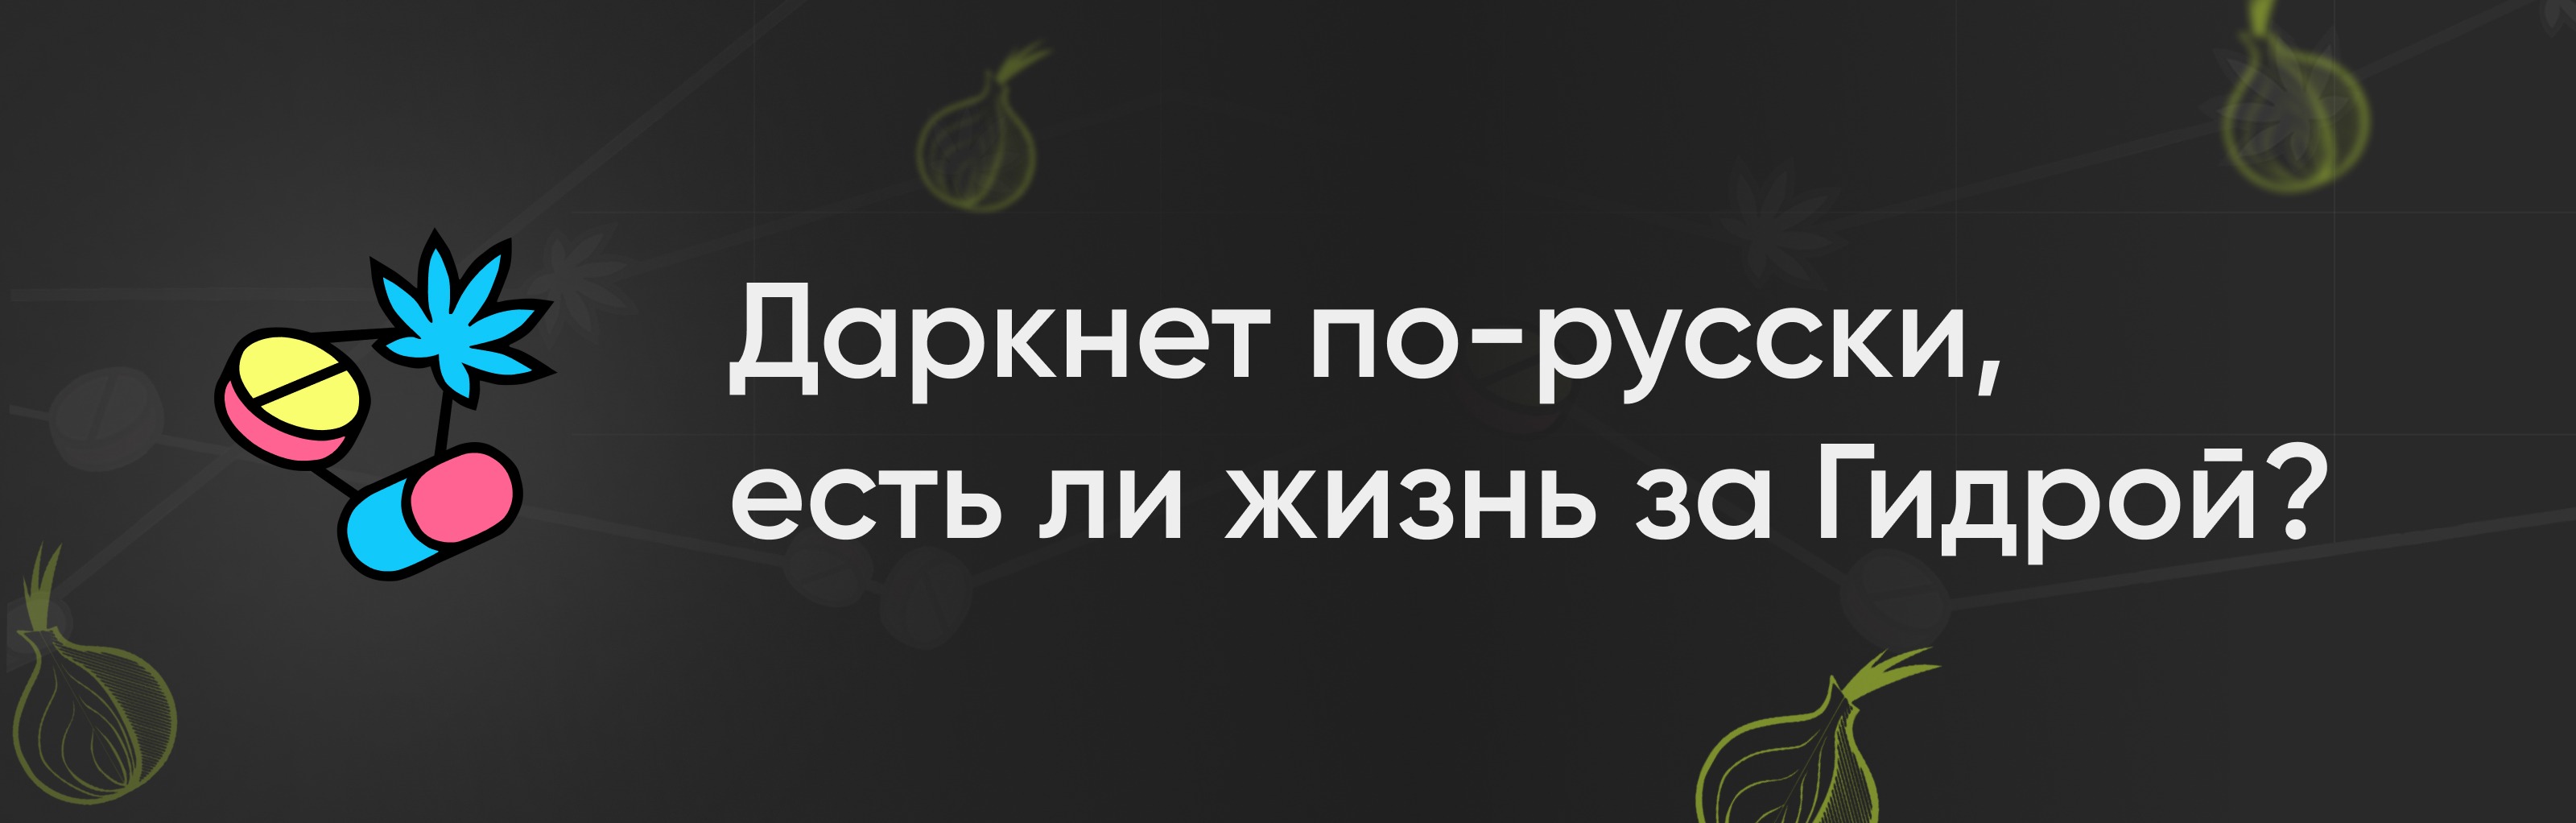 blacksprut официальный сайт на русском языке даркнет